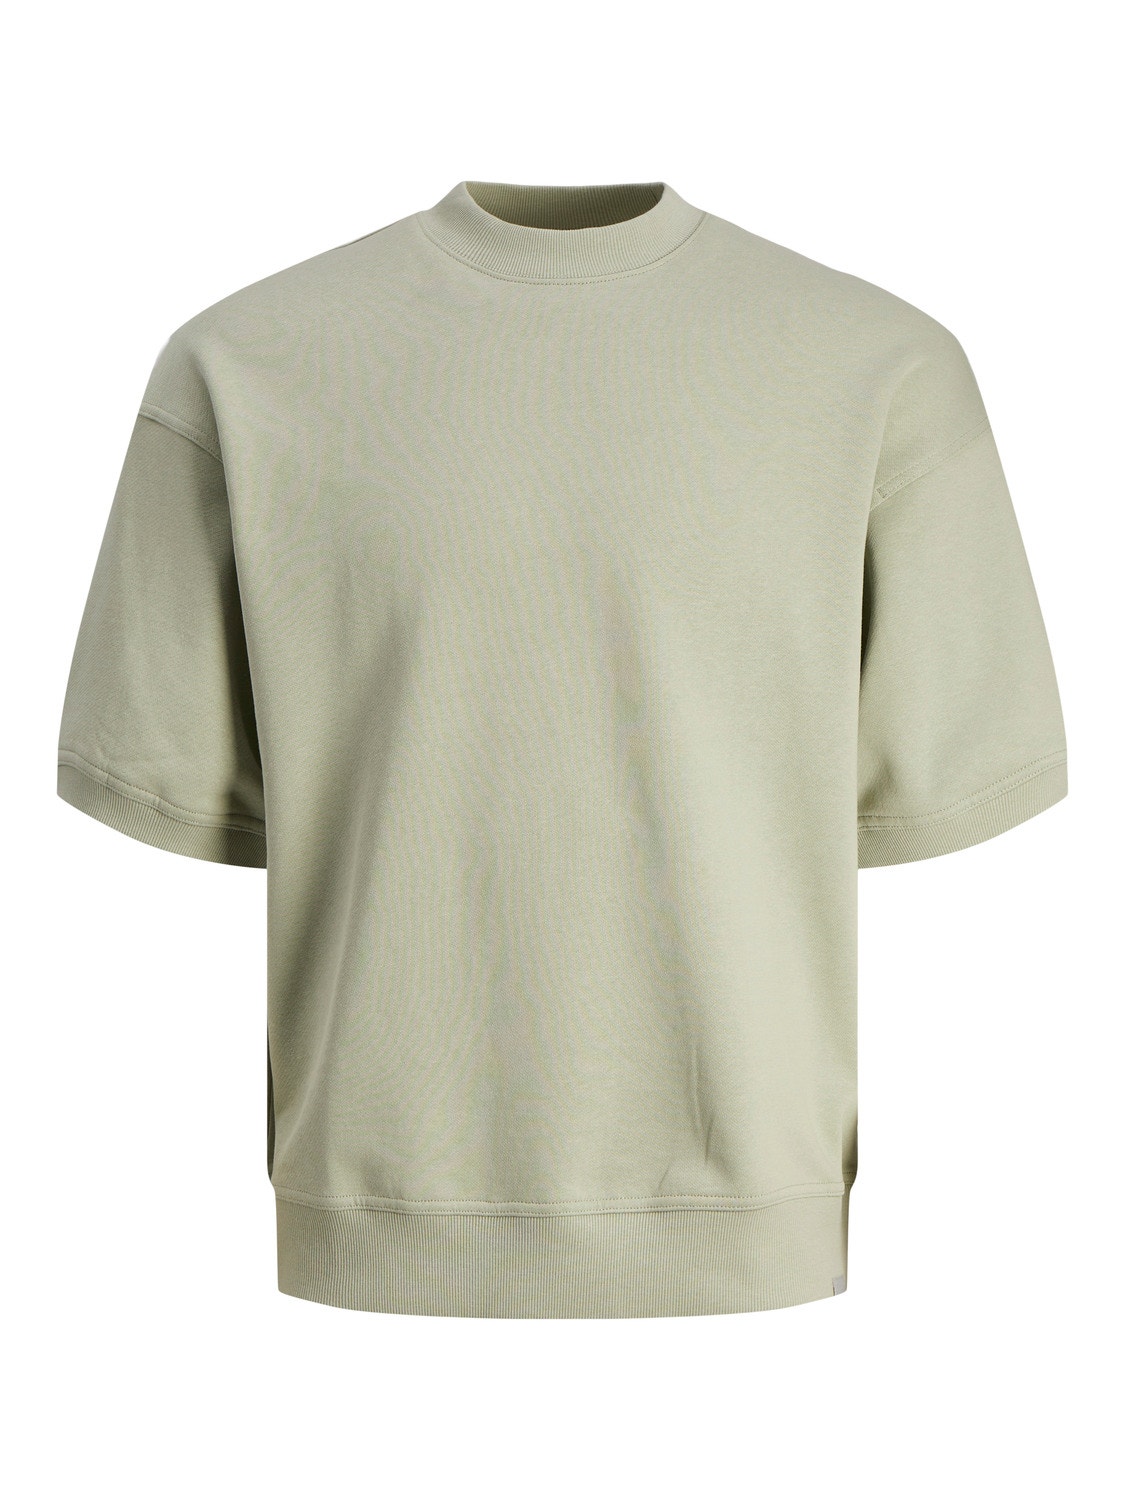 Jack & Jones Plain Crewn Neck Sweatshirt -Desert Sage - 12255219